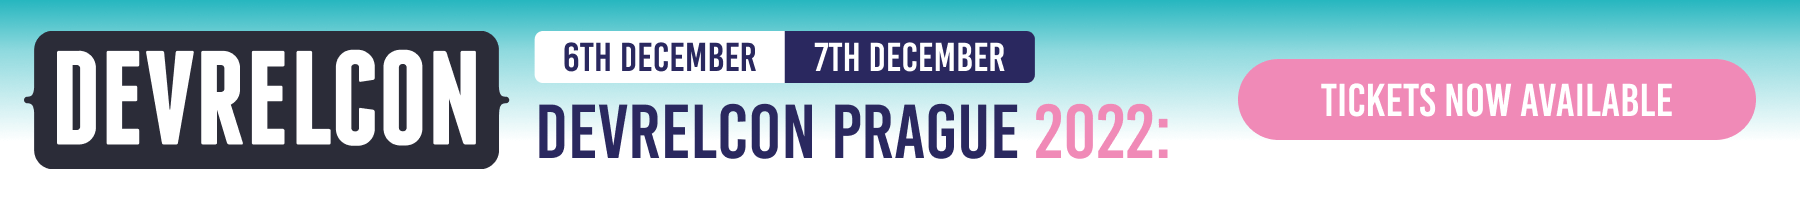 DevRelCon Prague 2022 tickets now available